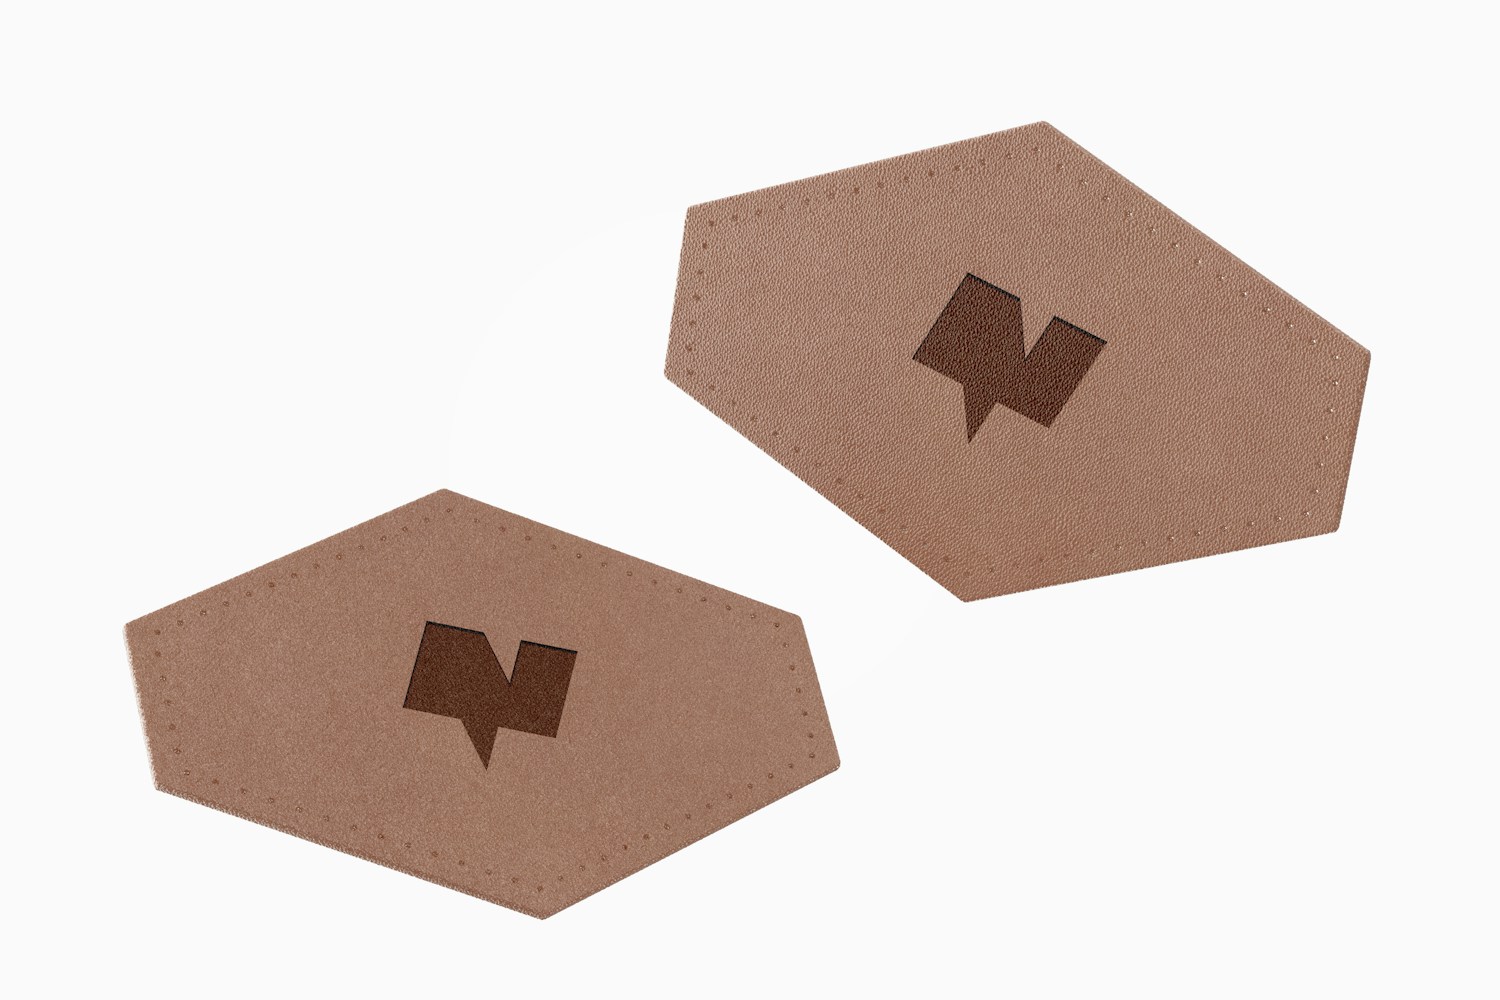 Hexagonal Leather Tags Mockup